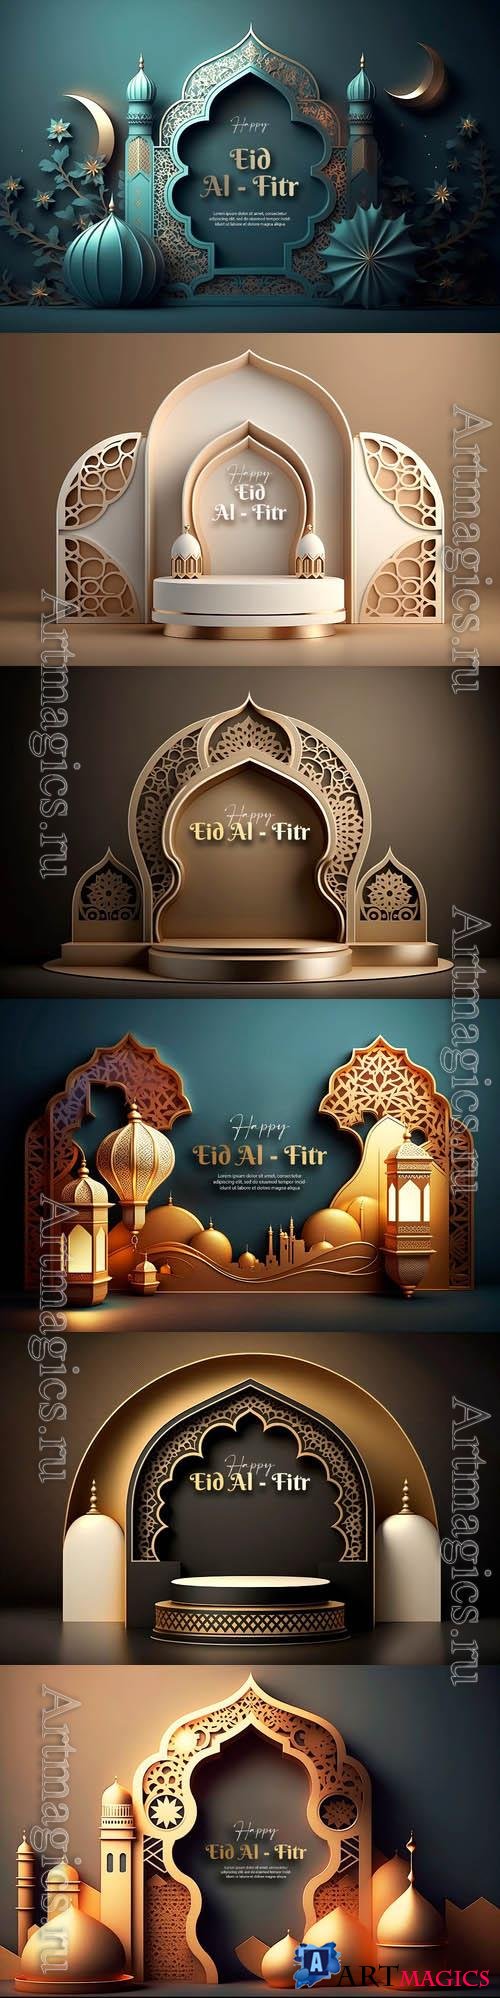 Luxurious psd podium in islamic style happy eid alfitr